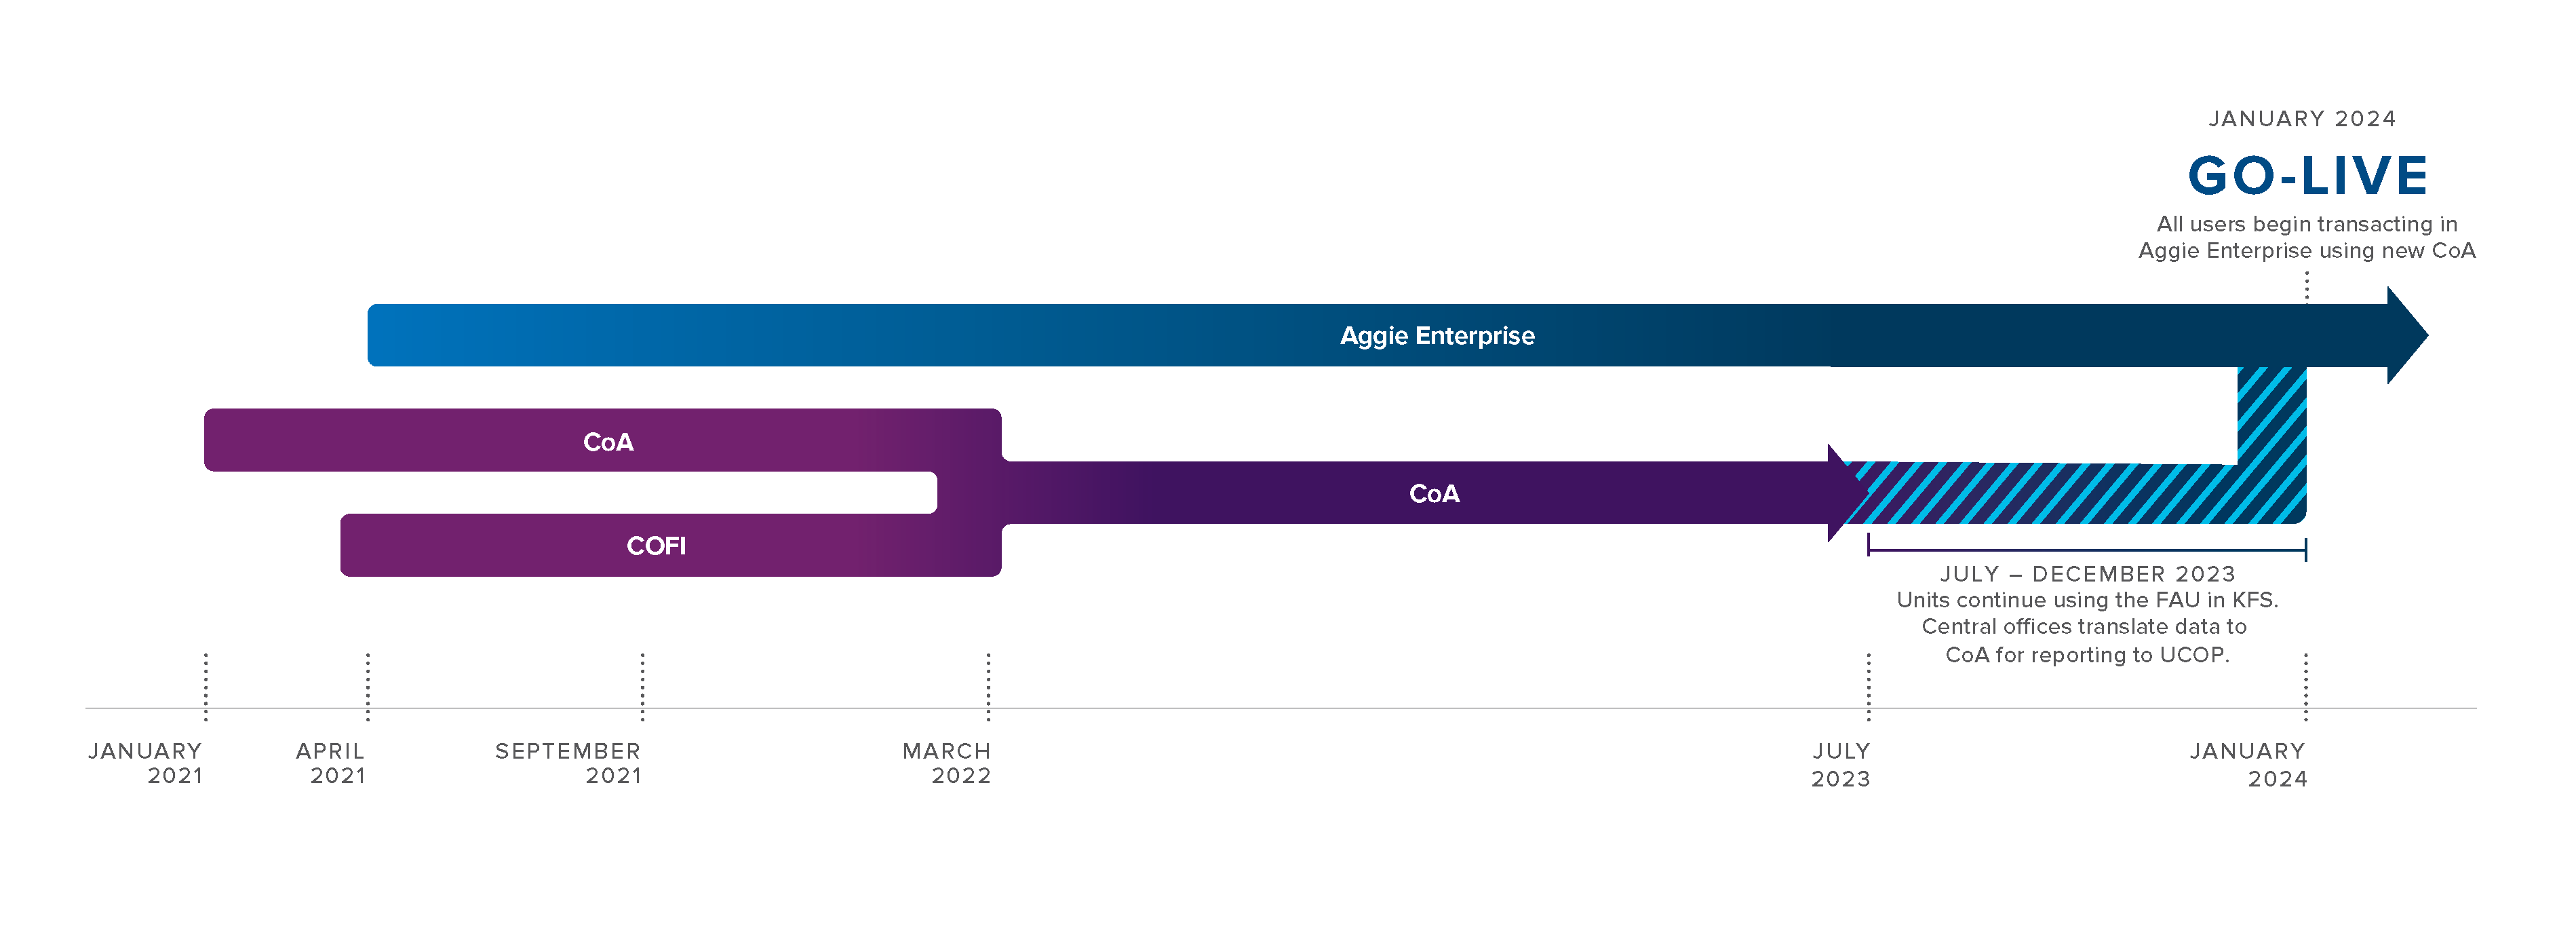 Aggie Enterprise Overview Timeline